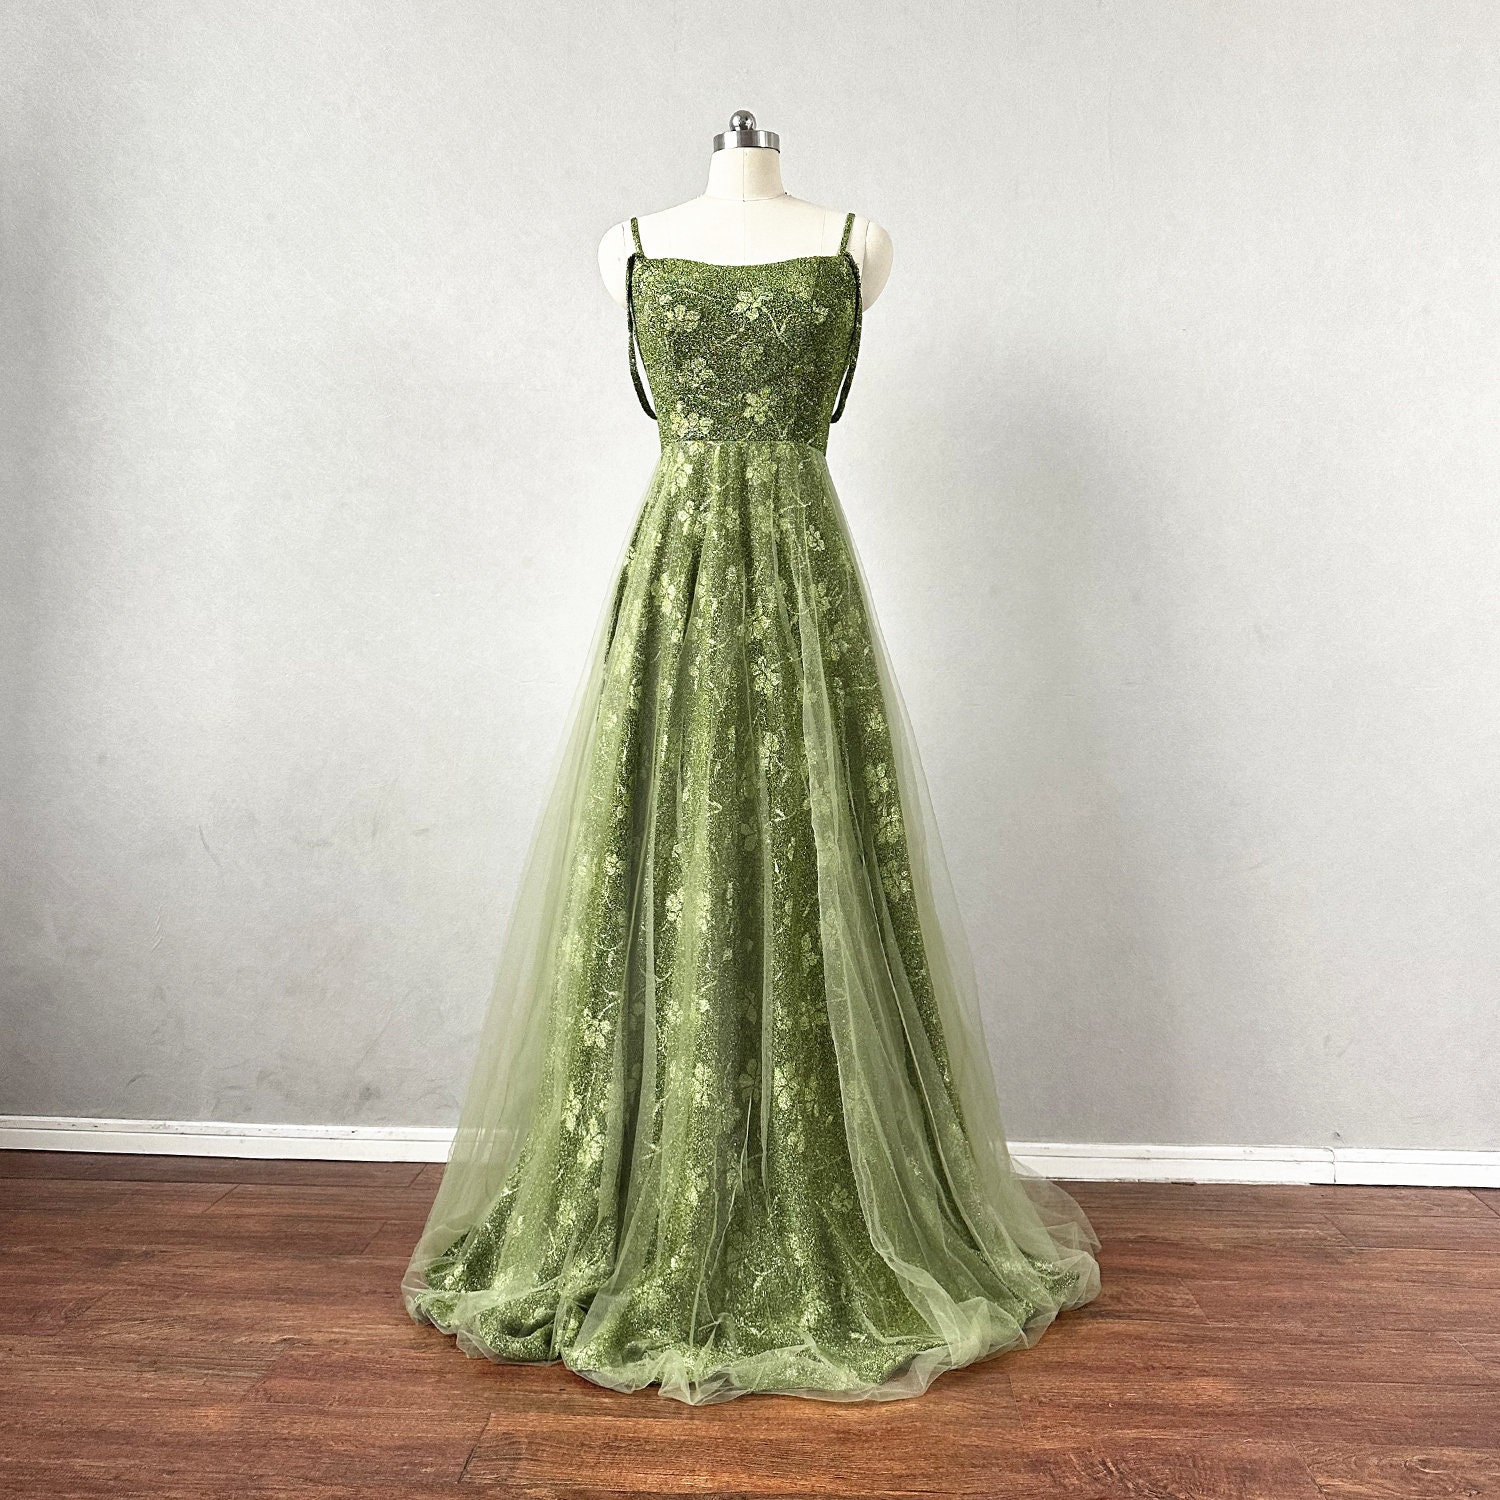 Moss Green Floral Prom Dress Corset Back Tulle Overlay Skirt - Etsy | 